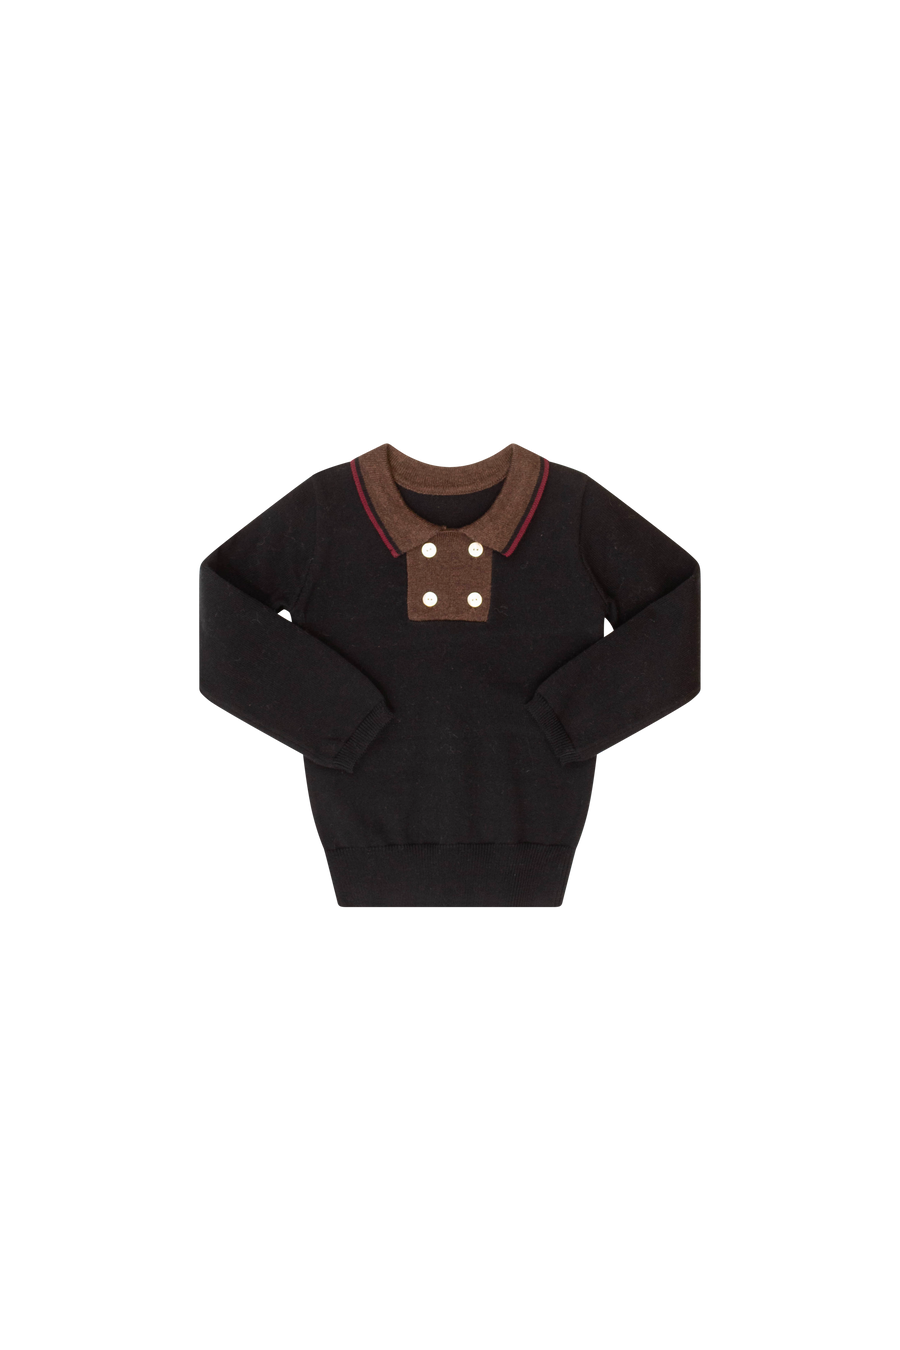 Colorblock black sweater by Kipp